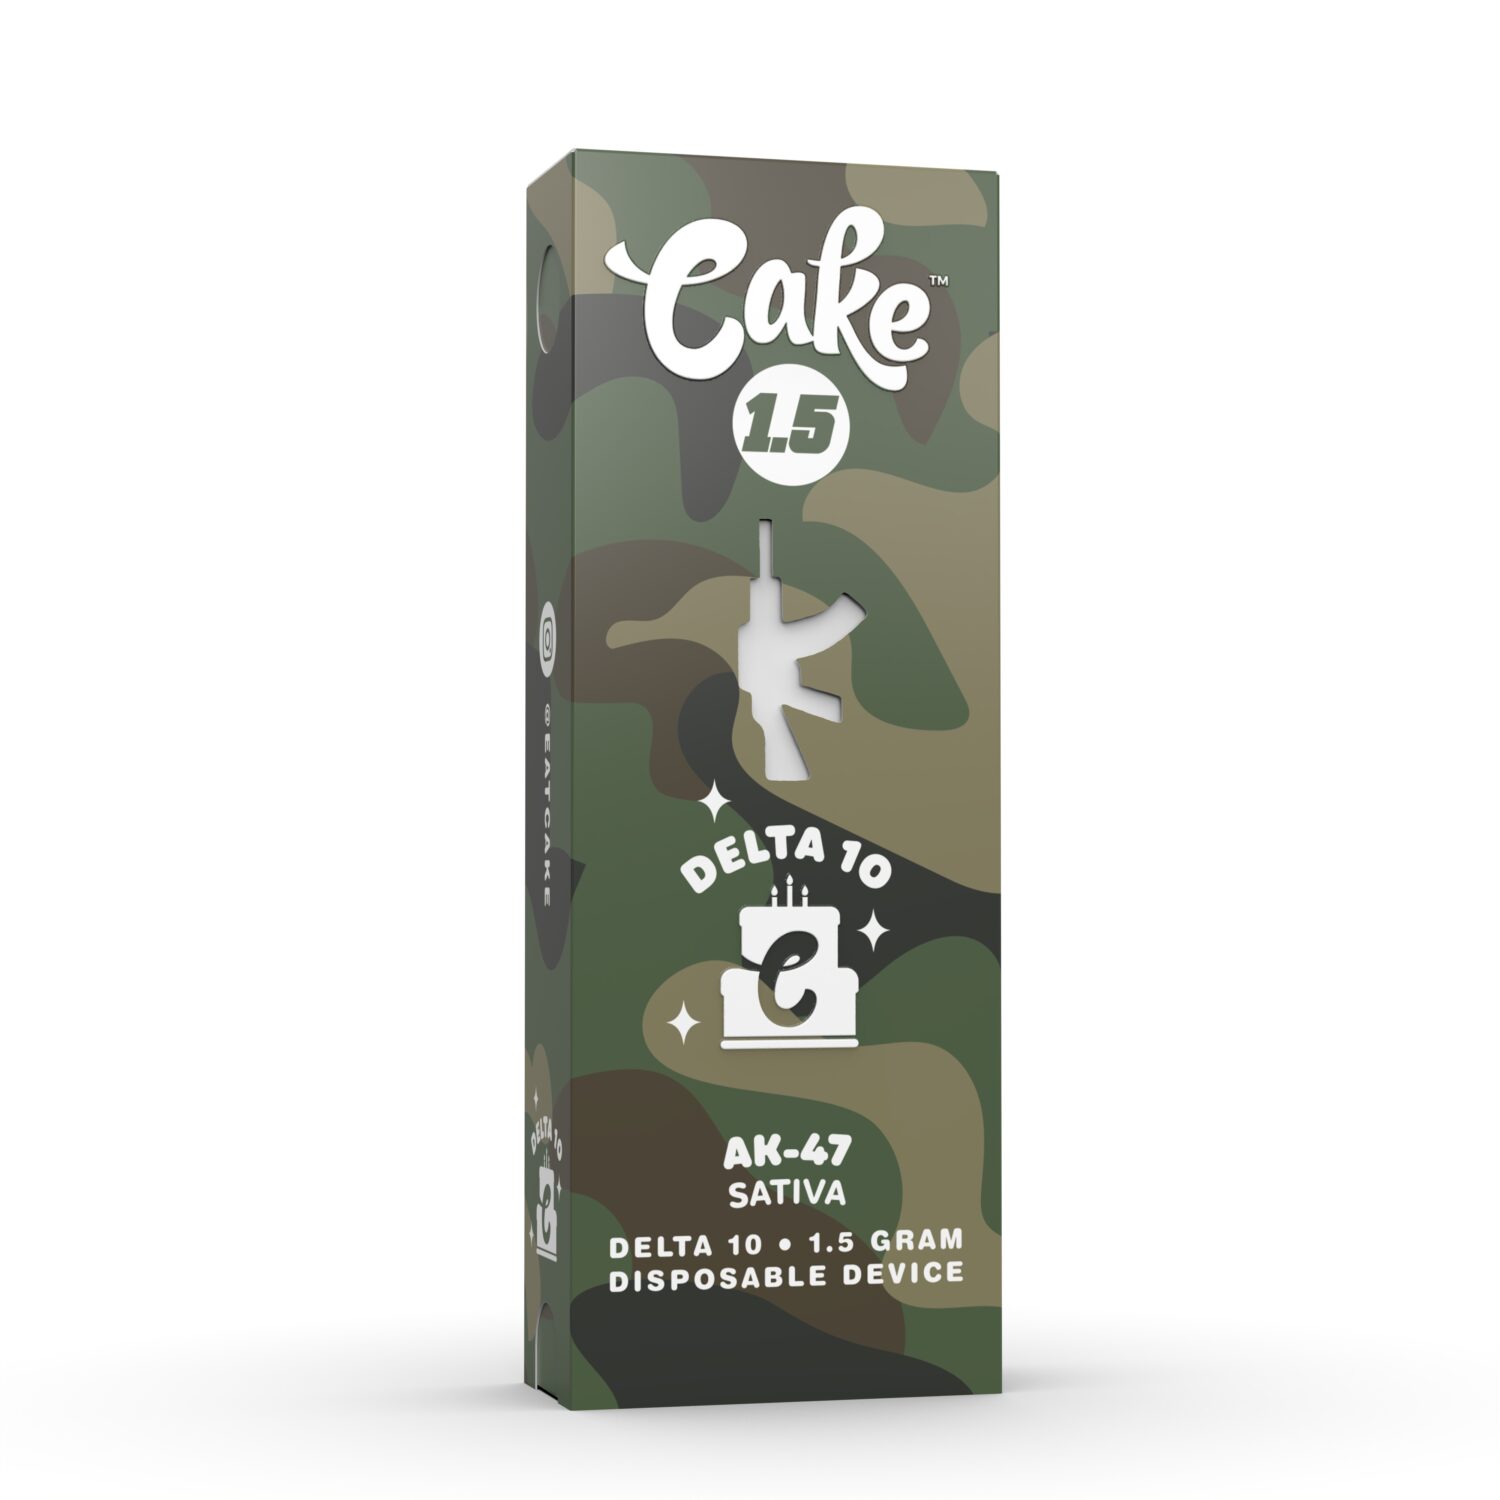 Cake-Delta-10-Disposable-1.5g-Ak-47-1-scaled-1.jpg